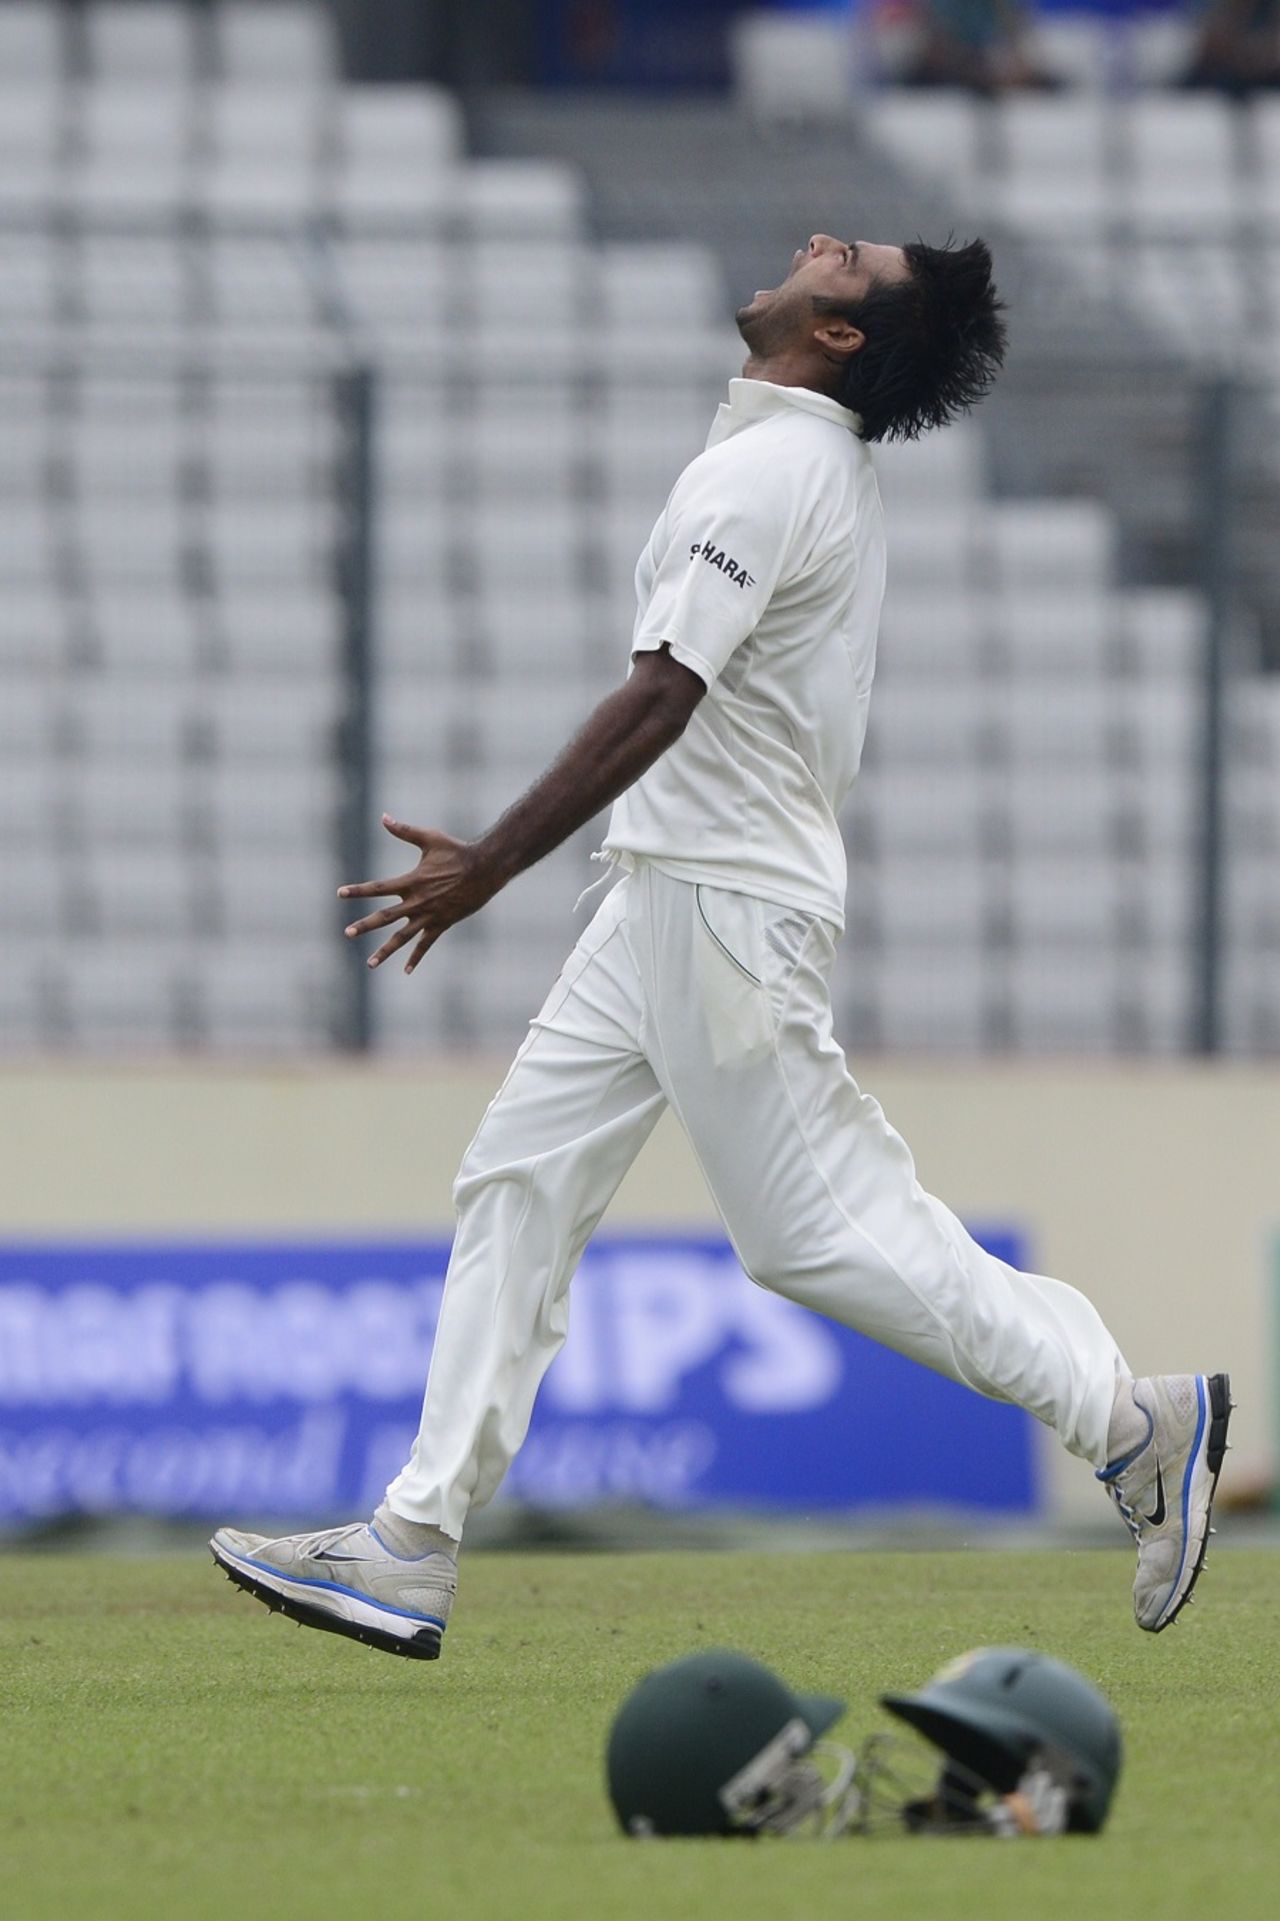 Shahadat Hossain roars after bowling Hamilton Masakadza, Bangladesh v Zimbabwe, 1st Test, Mirpur, 2nd day, October 26, 2014